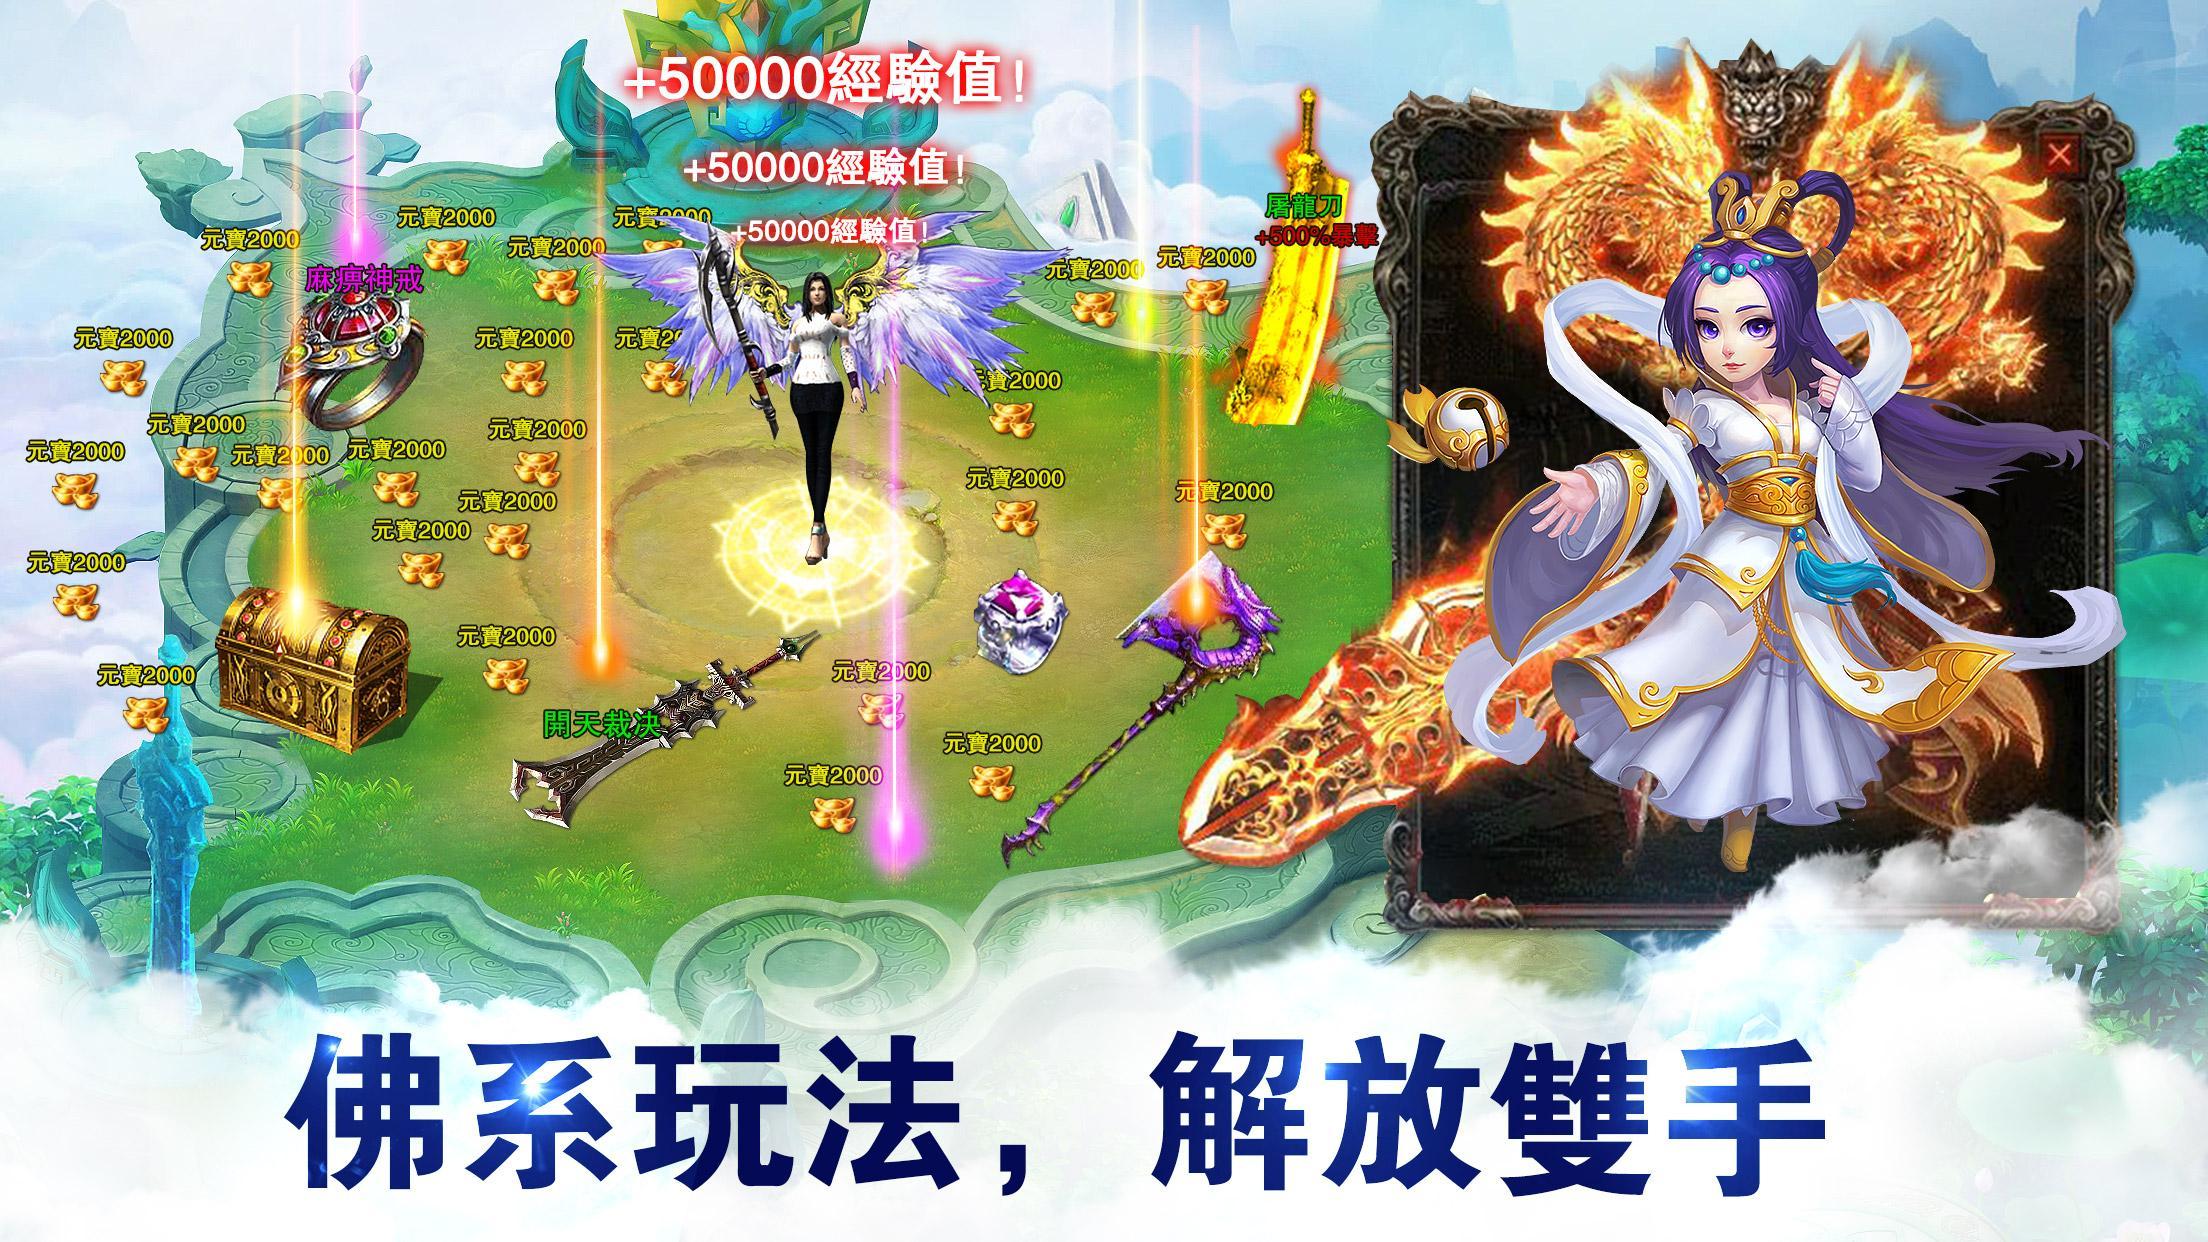 Screenshot 1 of Alamat ng Fengshen-Super Buddhist Leisure Idle Mobile Game 201901251730-apk